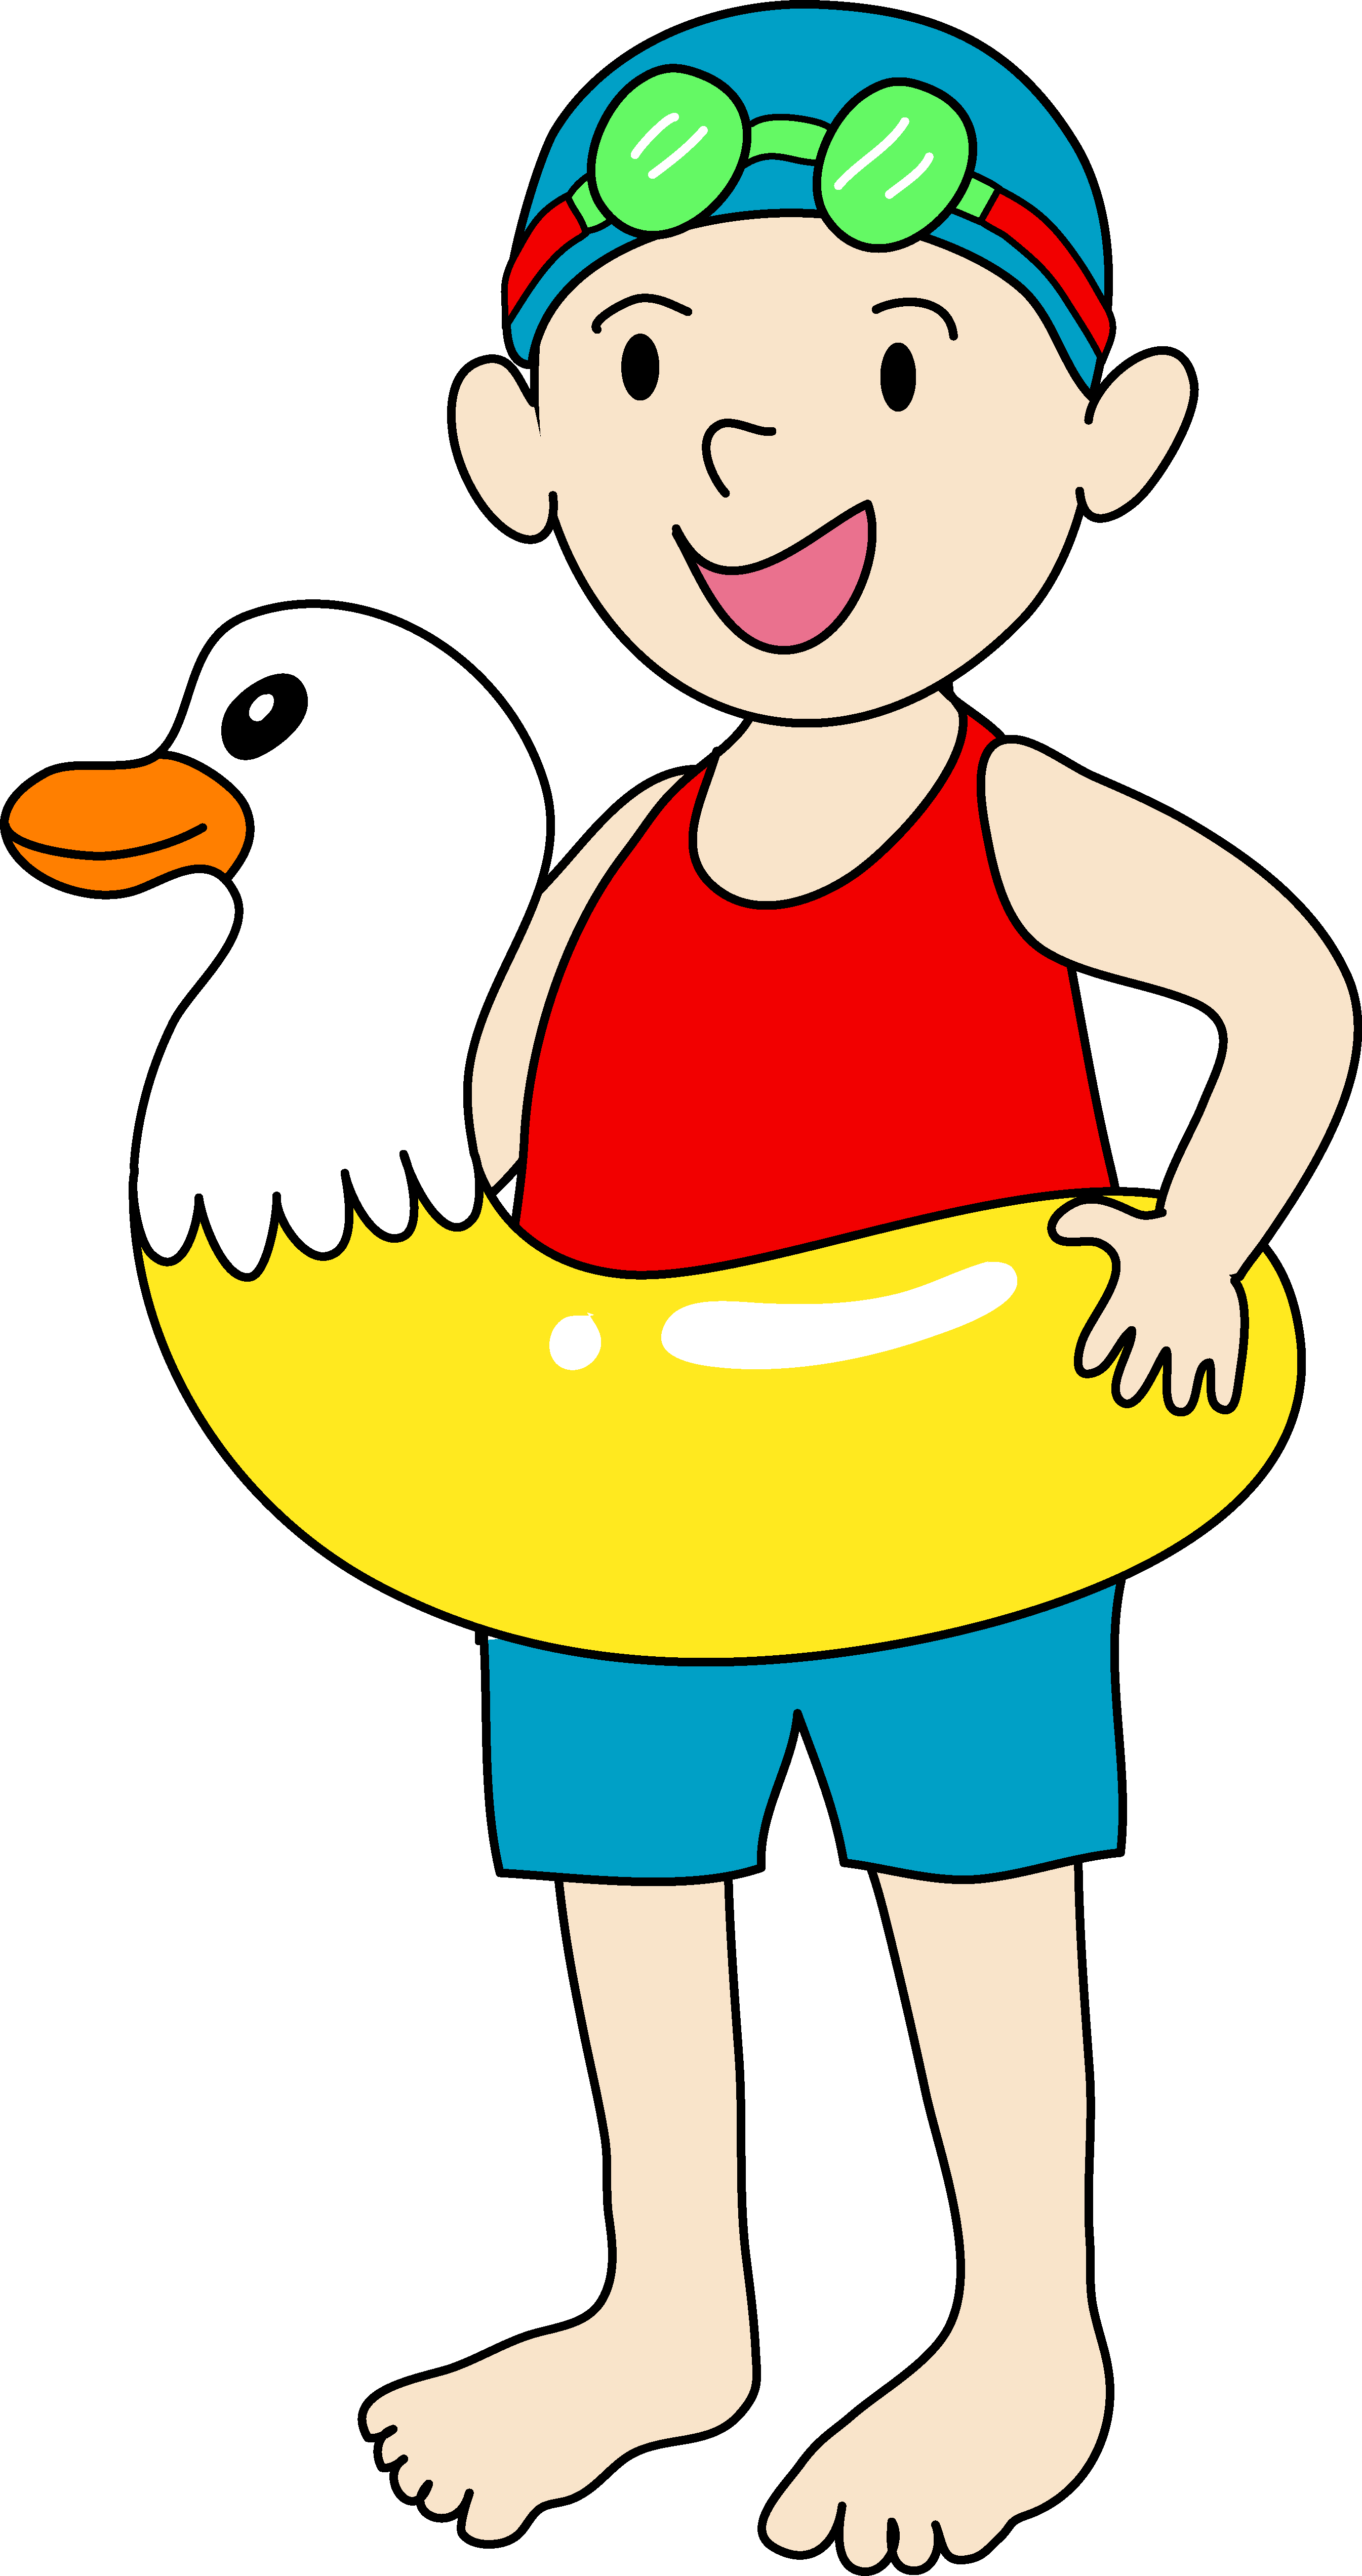 Swimming clipart boy cartoon - ClipartFox